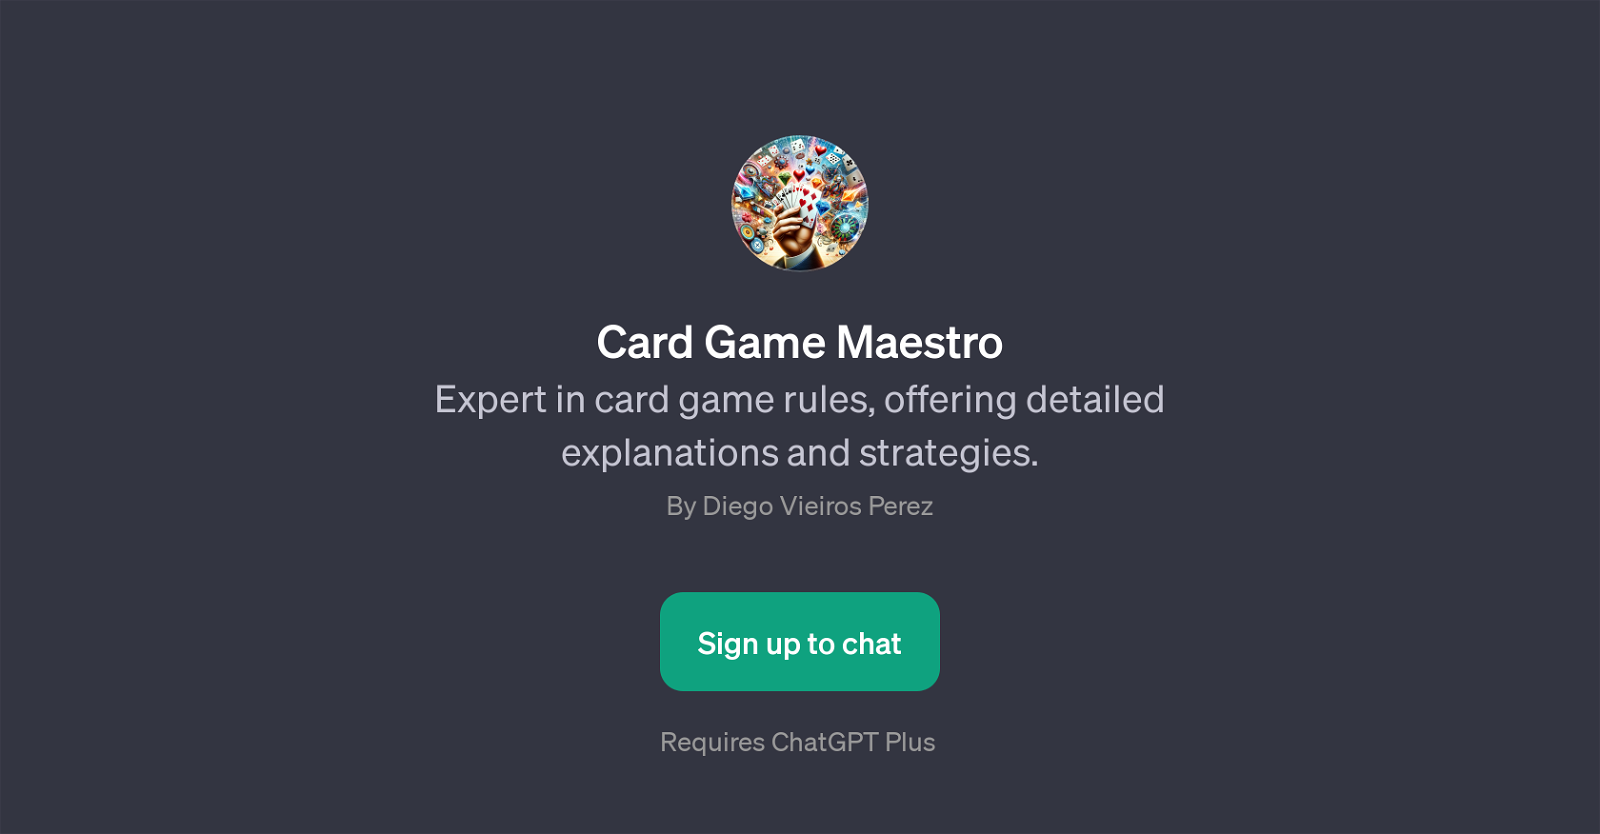 Card Game Maestro website